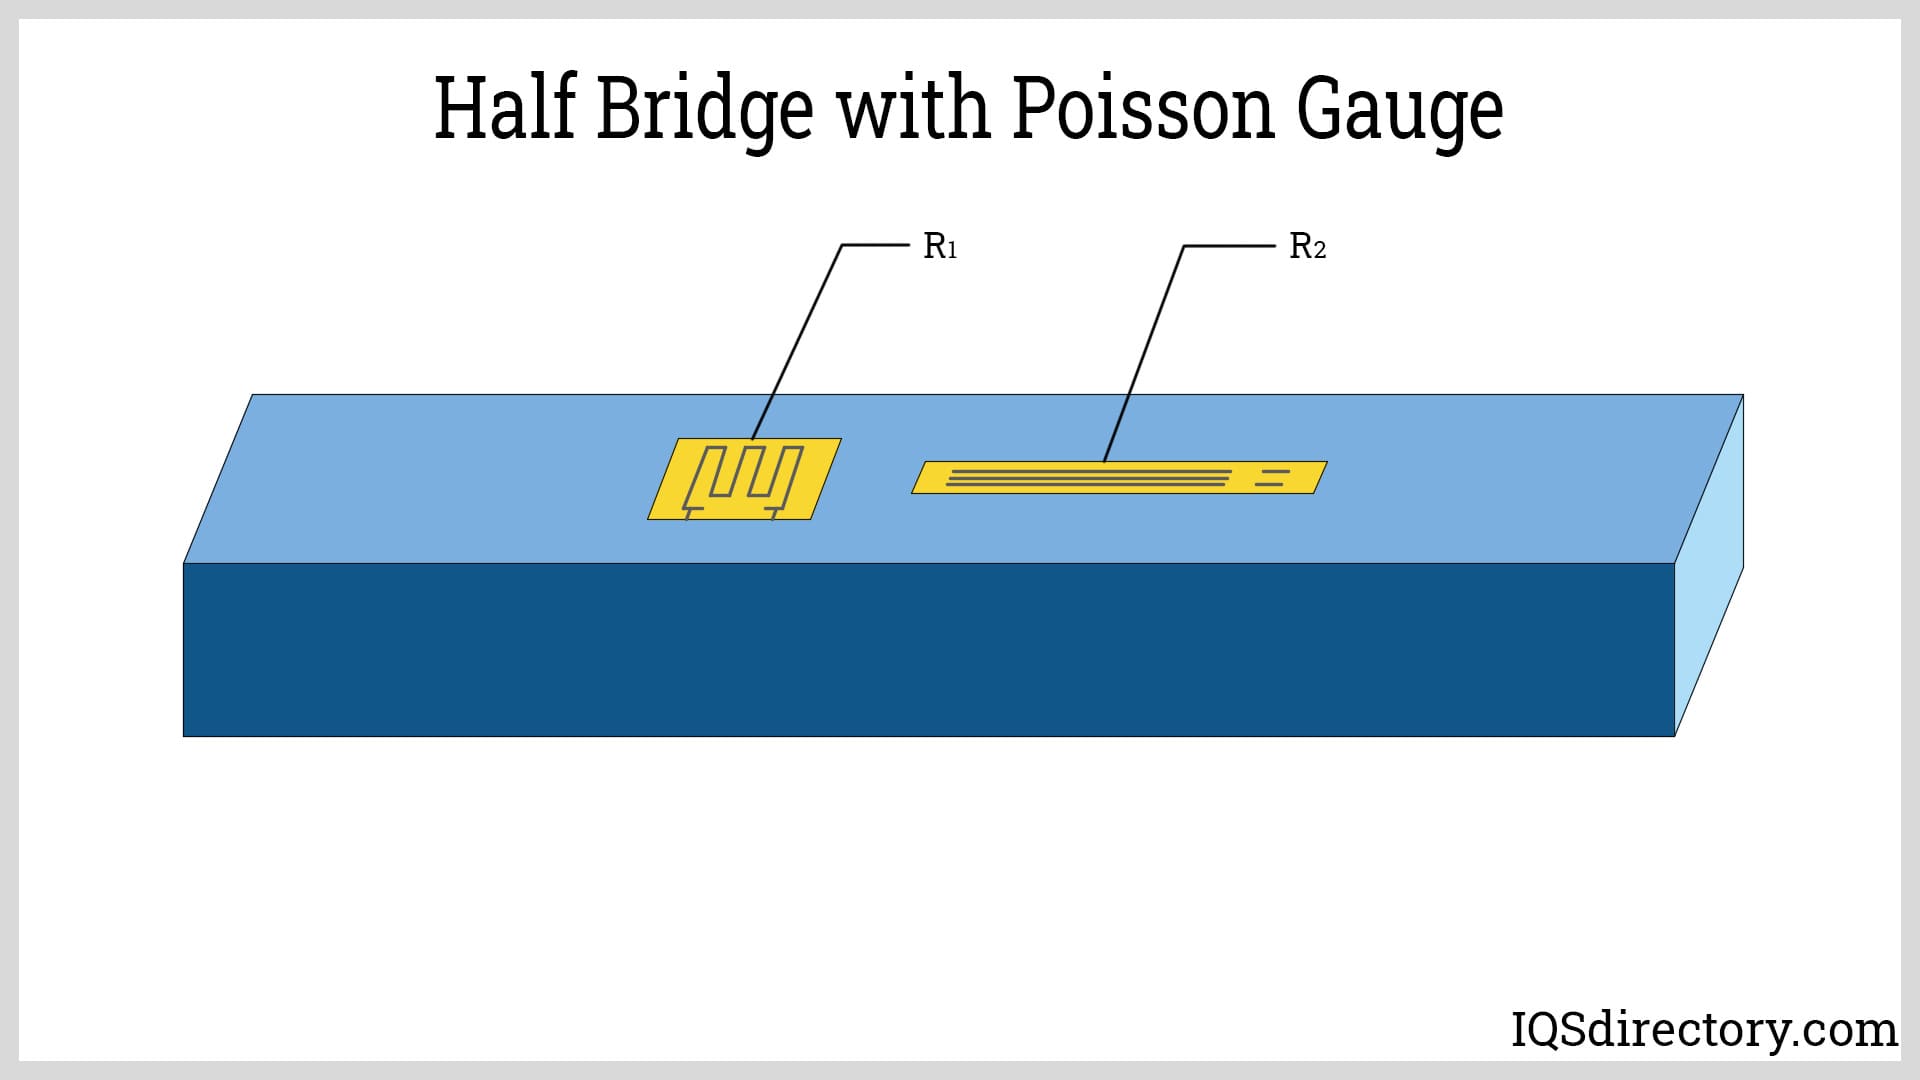 Half Bridge with Poisson Gauge